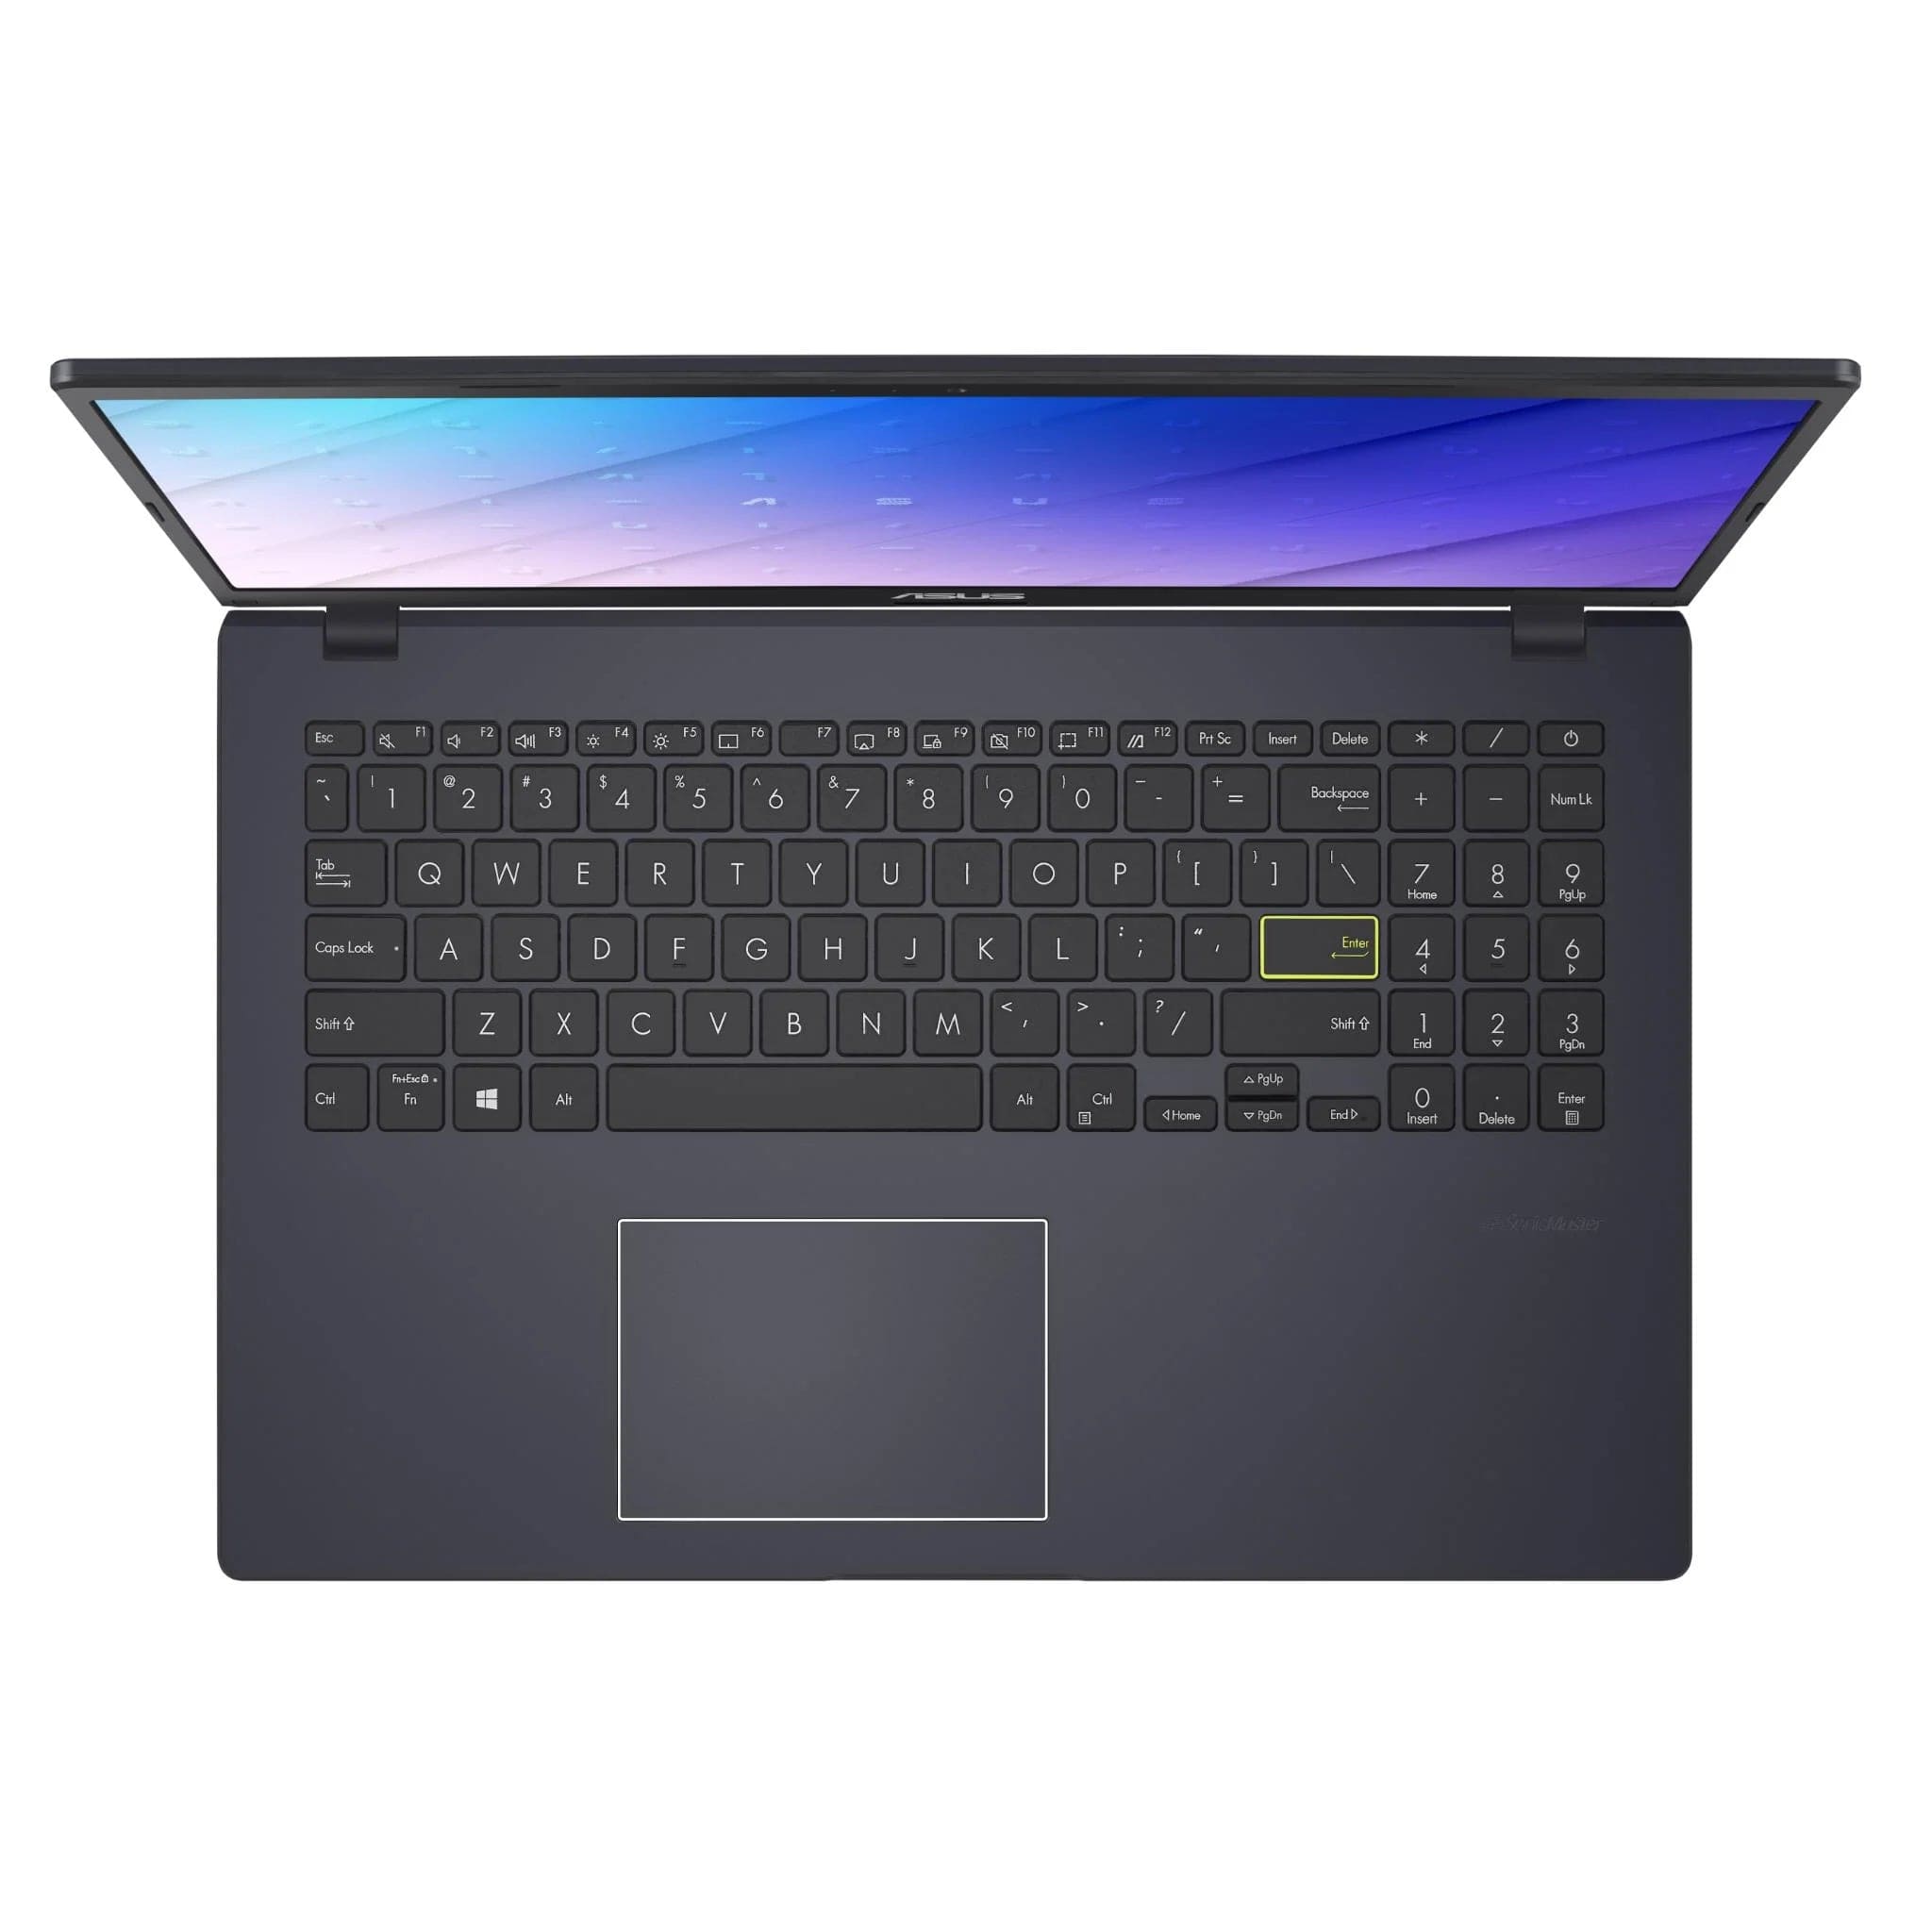 Asus 15.6 Full HD Laptop (128GB)-Intel Celeron